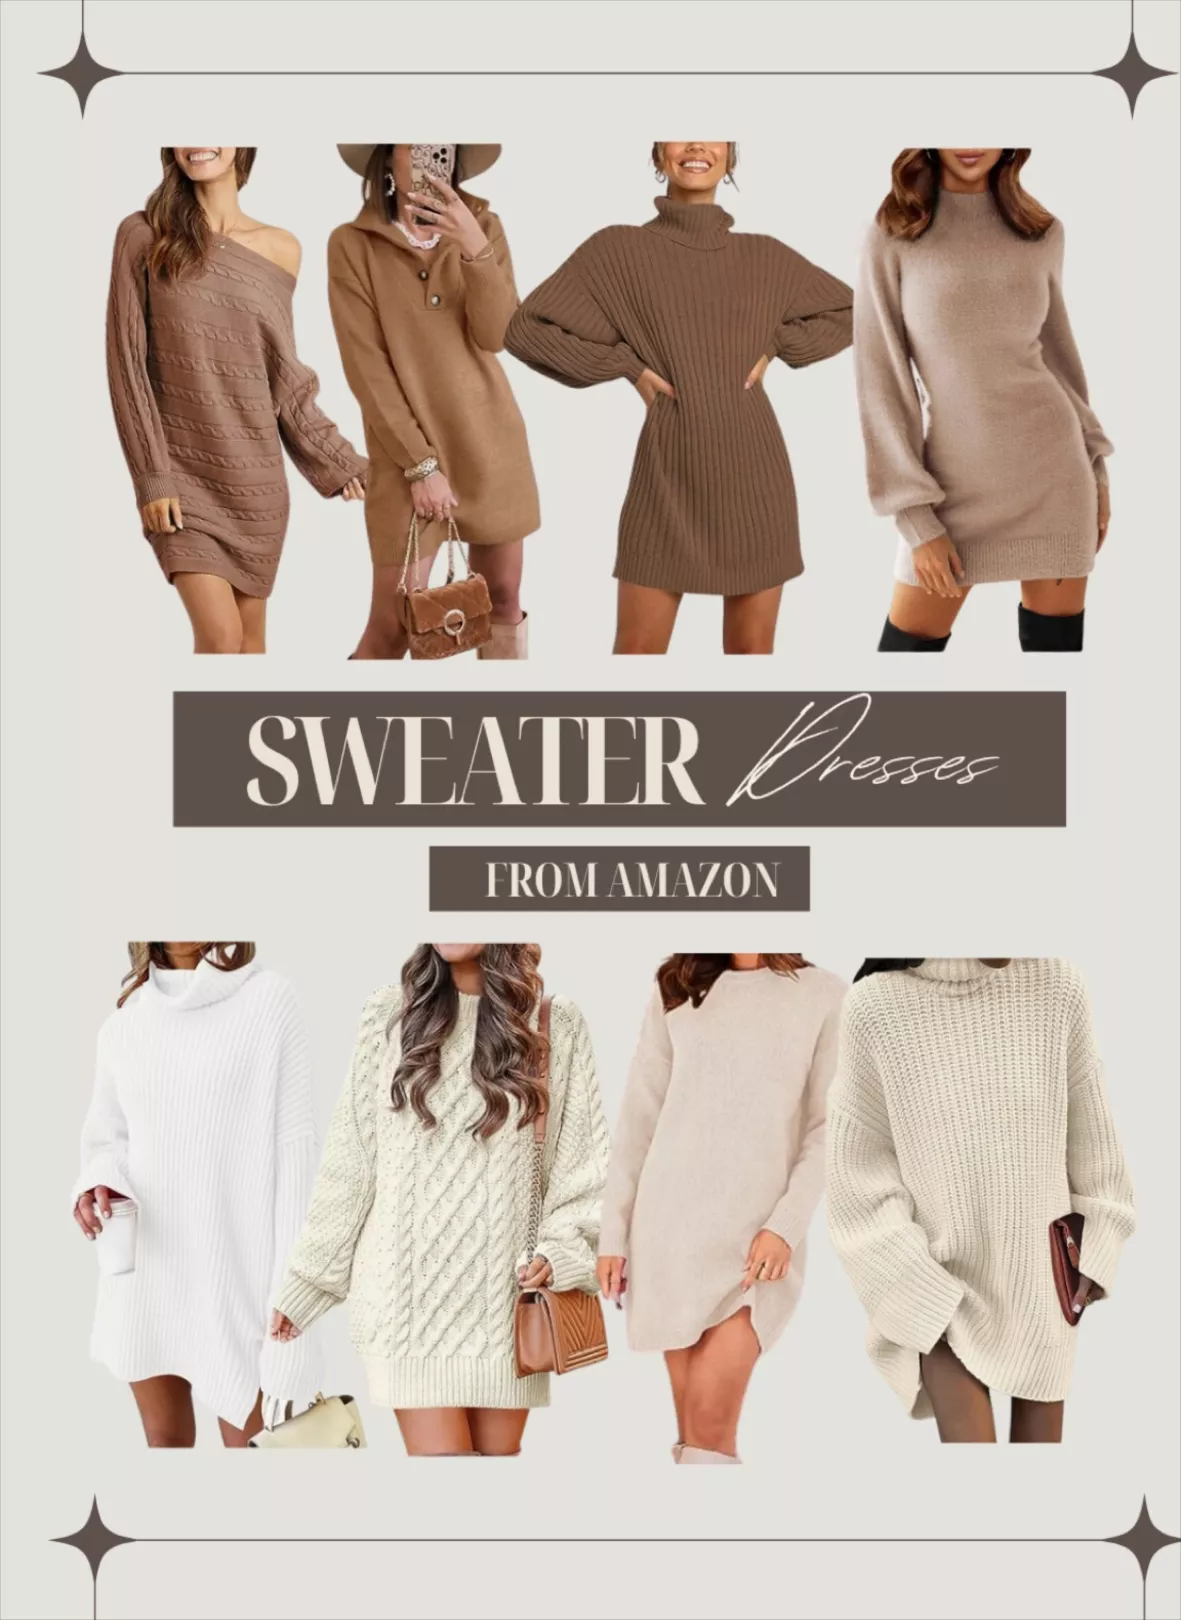 Women's Turtleneck Sweaters, Oversized & Cropped